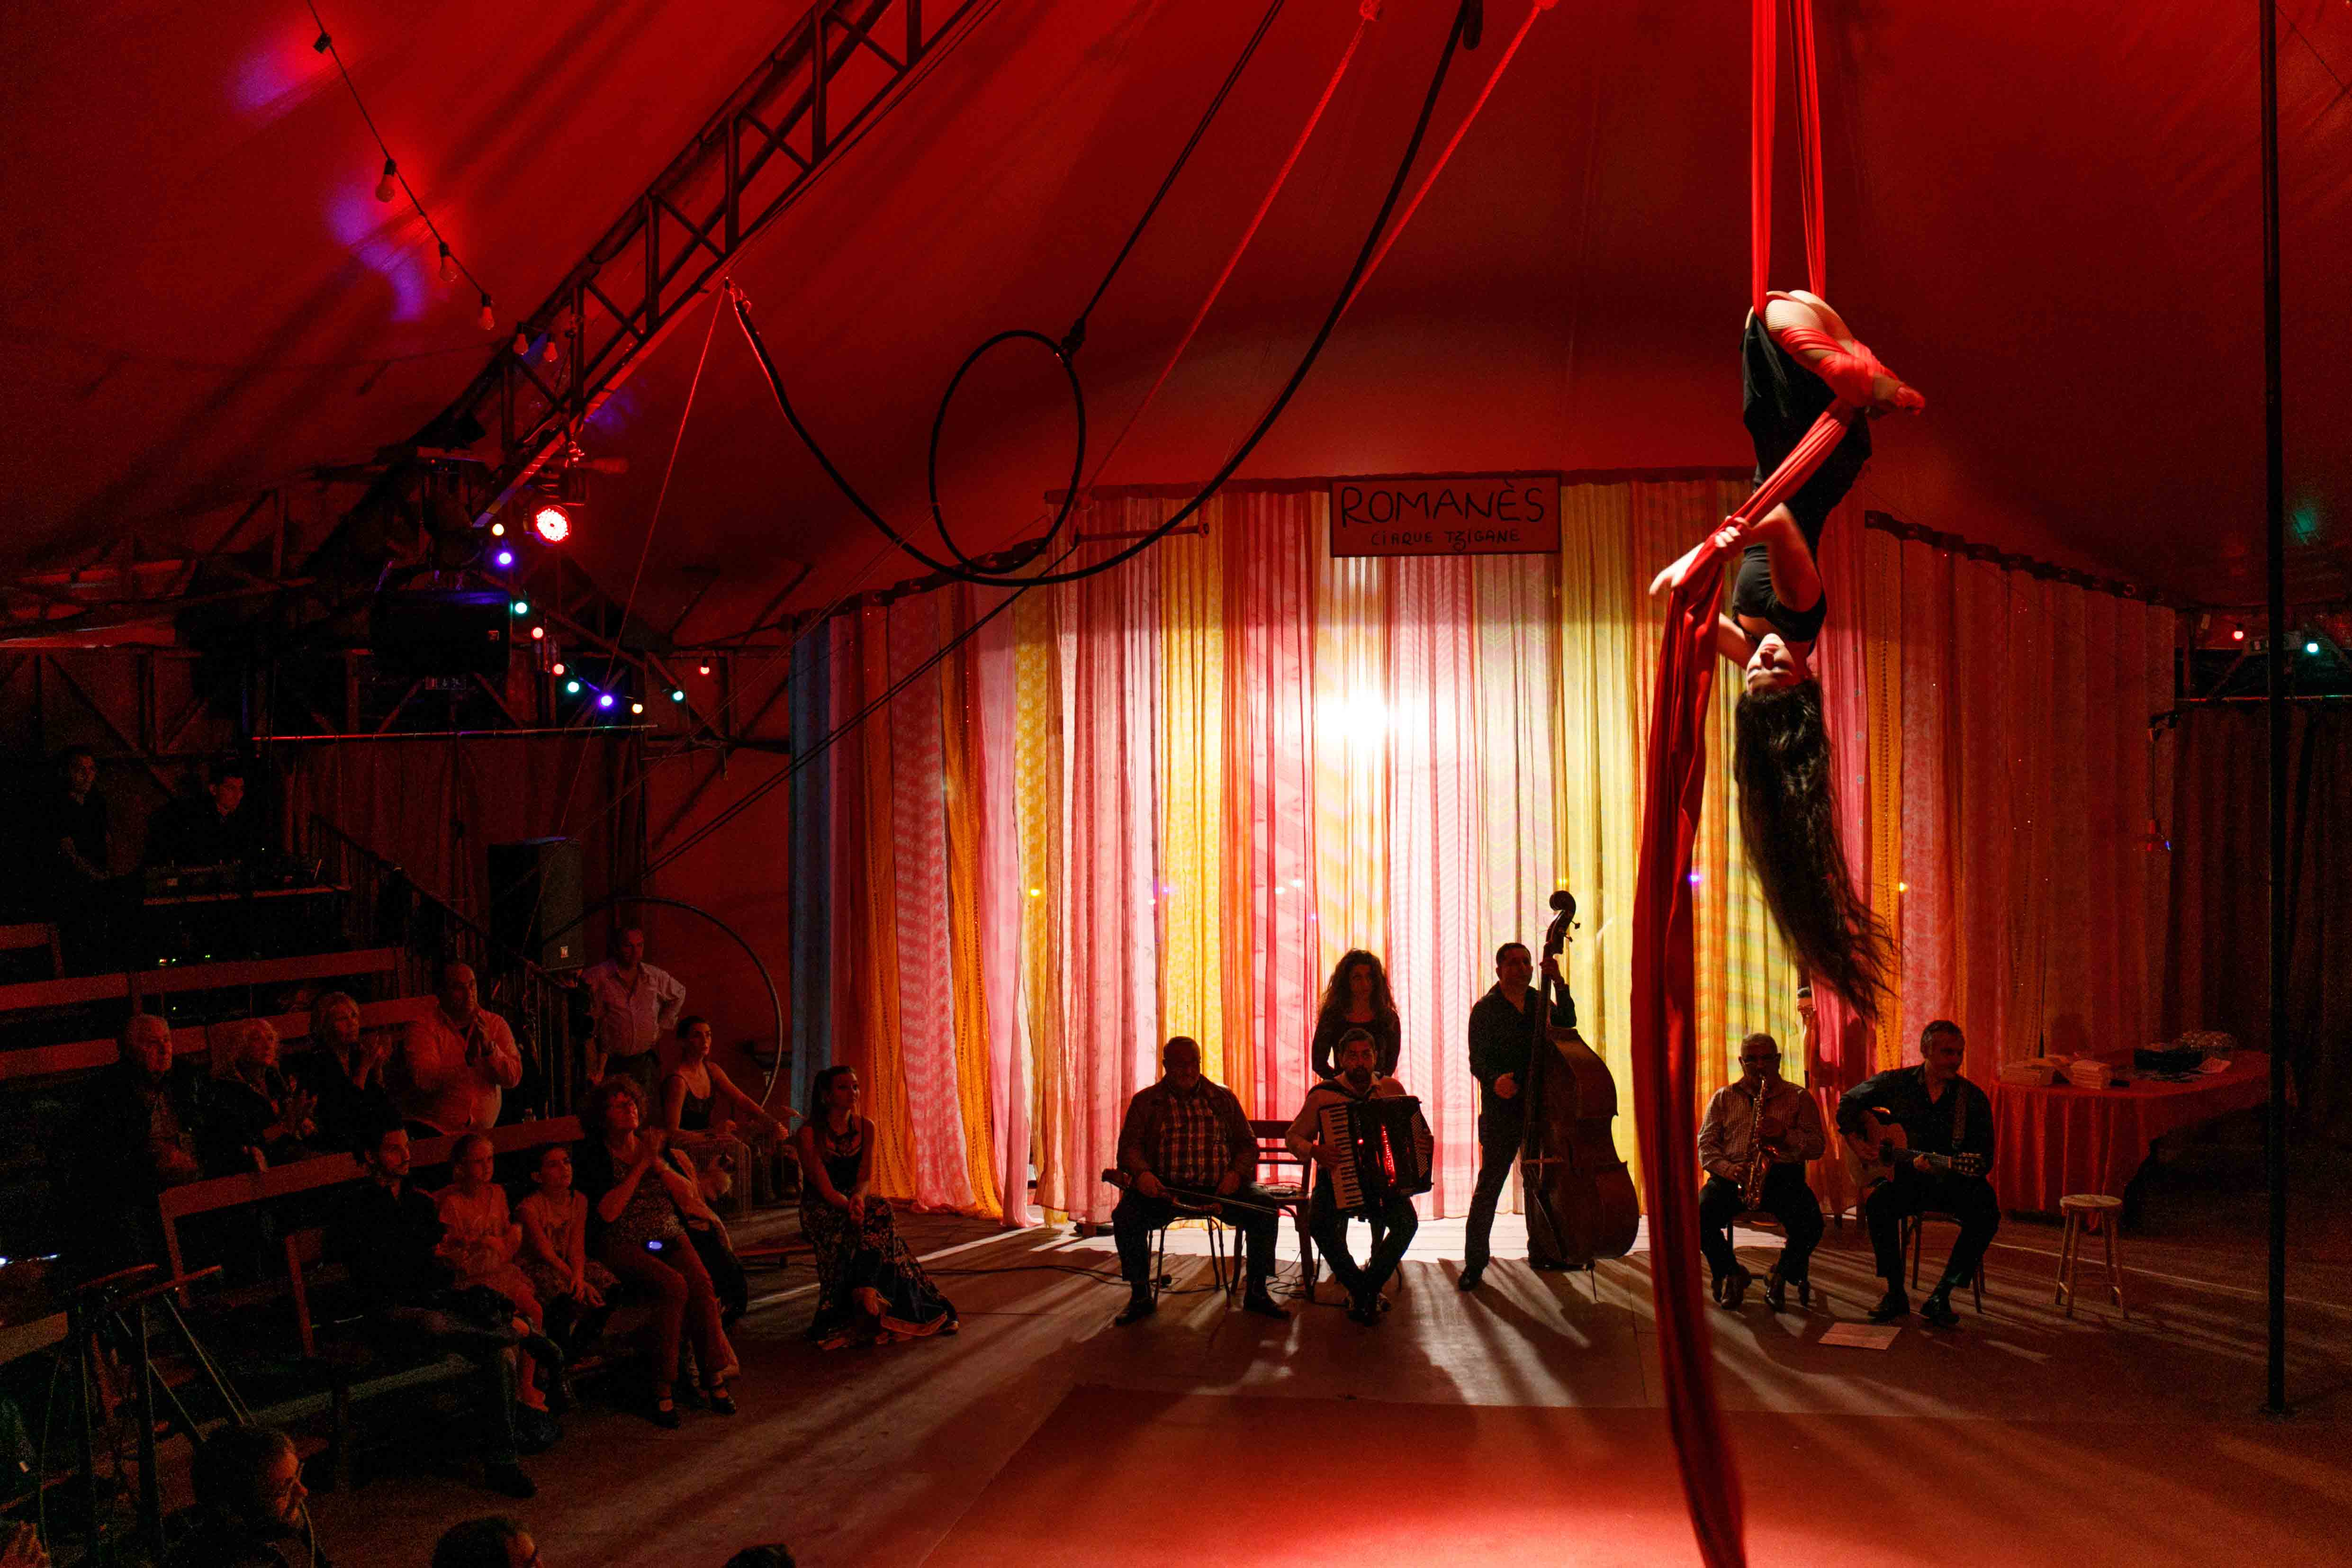 Romanès circus, 2017.